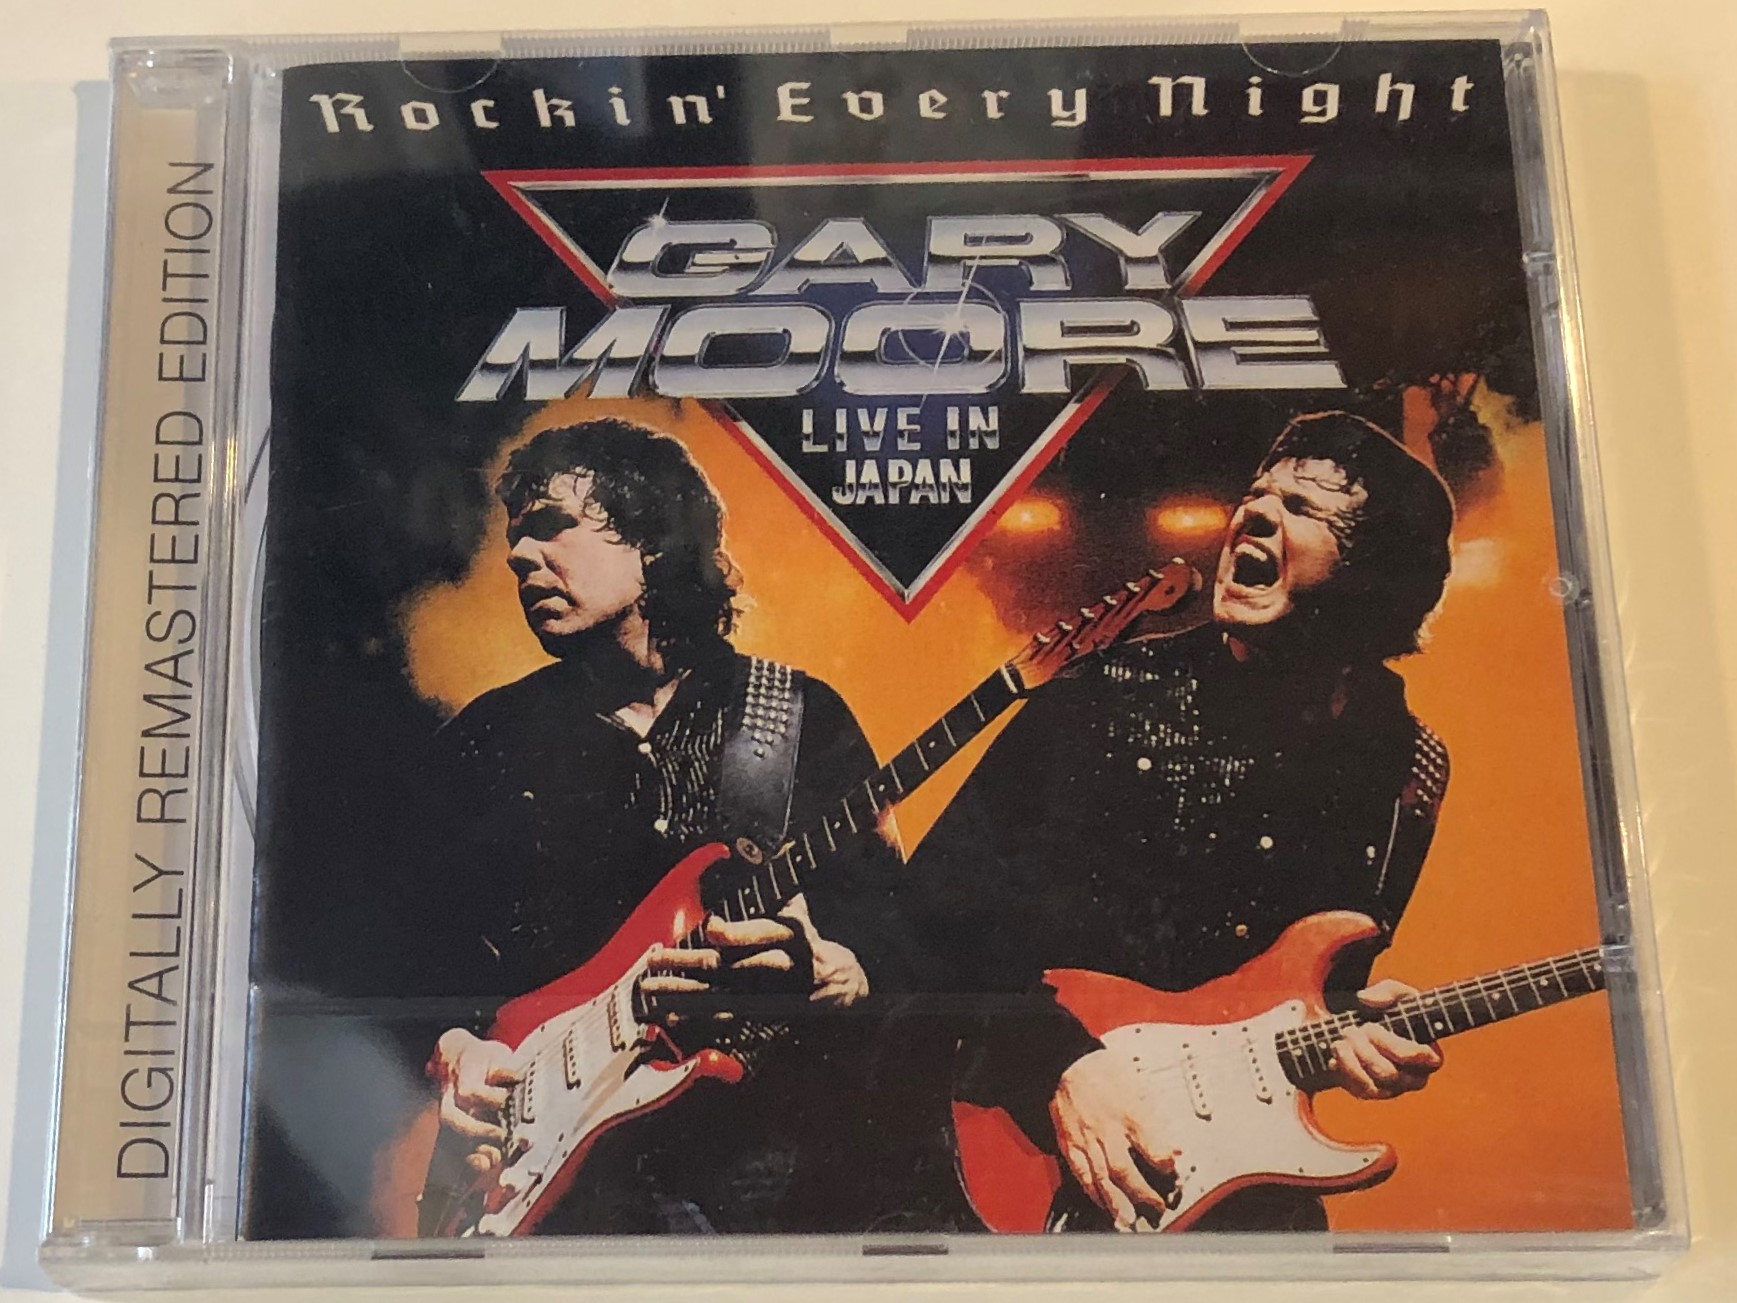 rockin-every-night-gary-moore-live-in-japan-digitaly-remastered-edition-virgin-audio-cd-2002-724358366822-1-.jpg